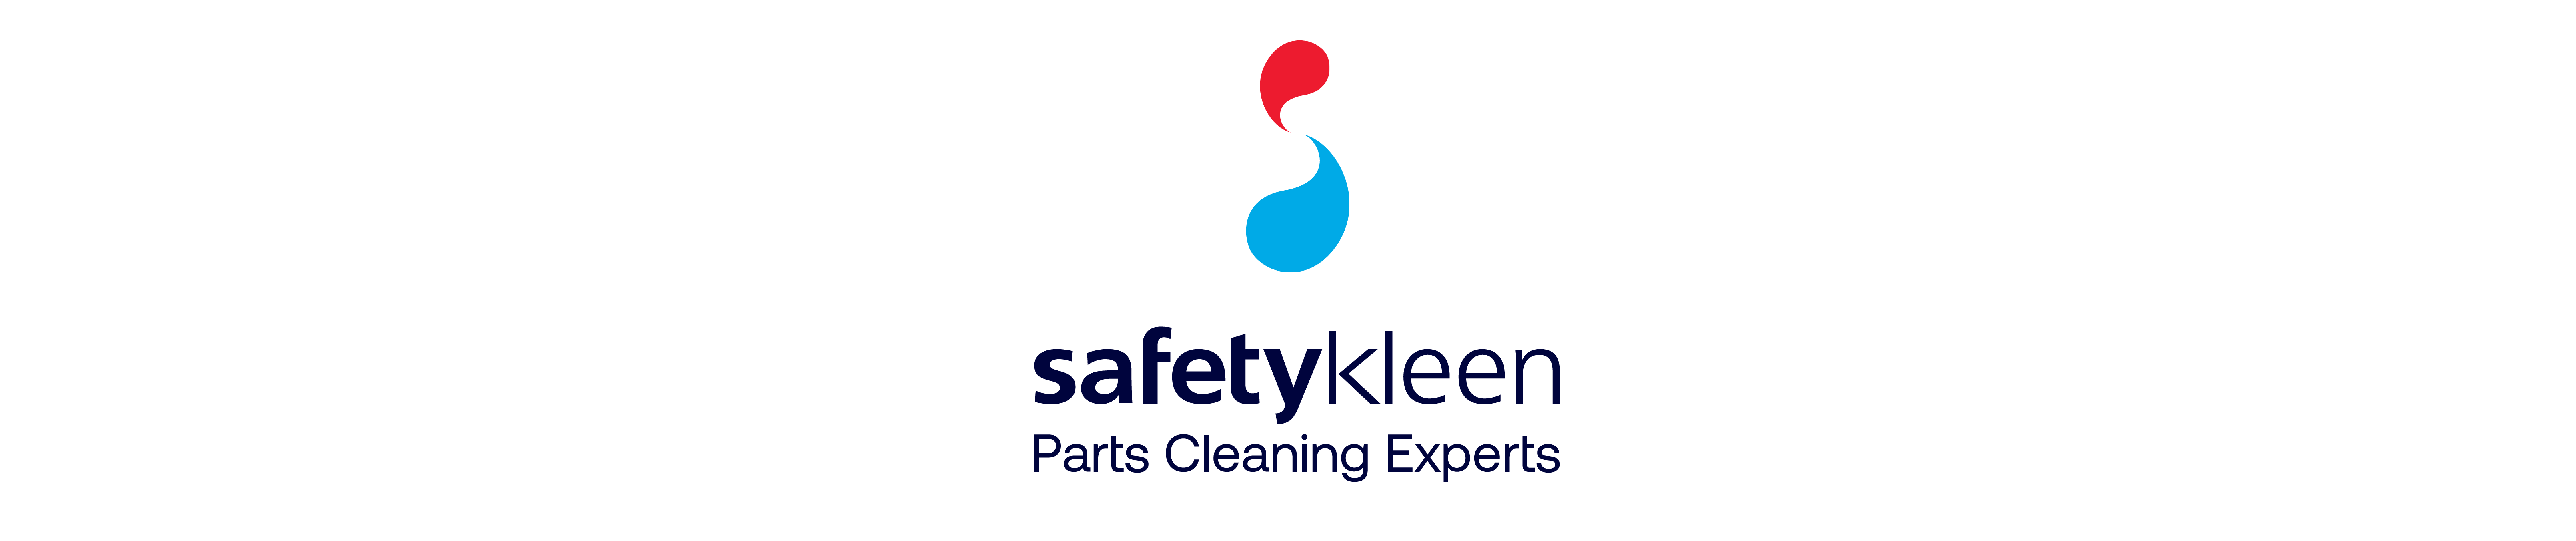 Careers | Safety-Kleen Careers